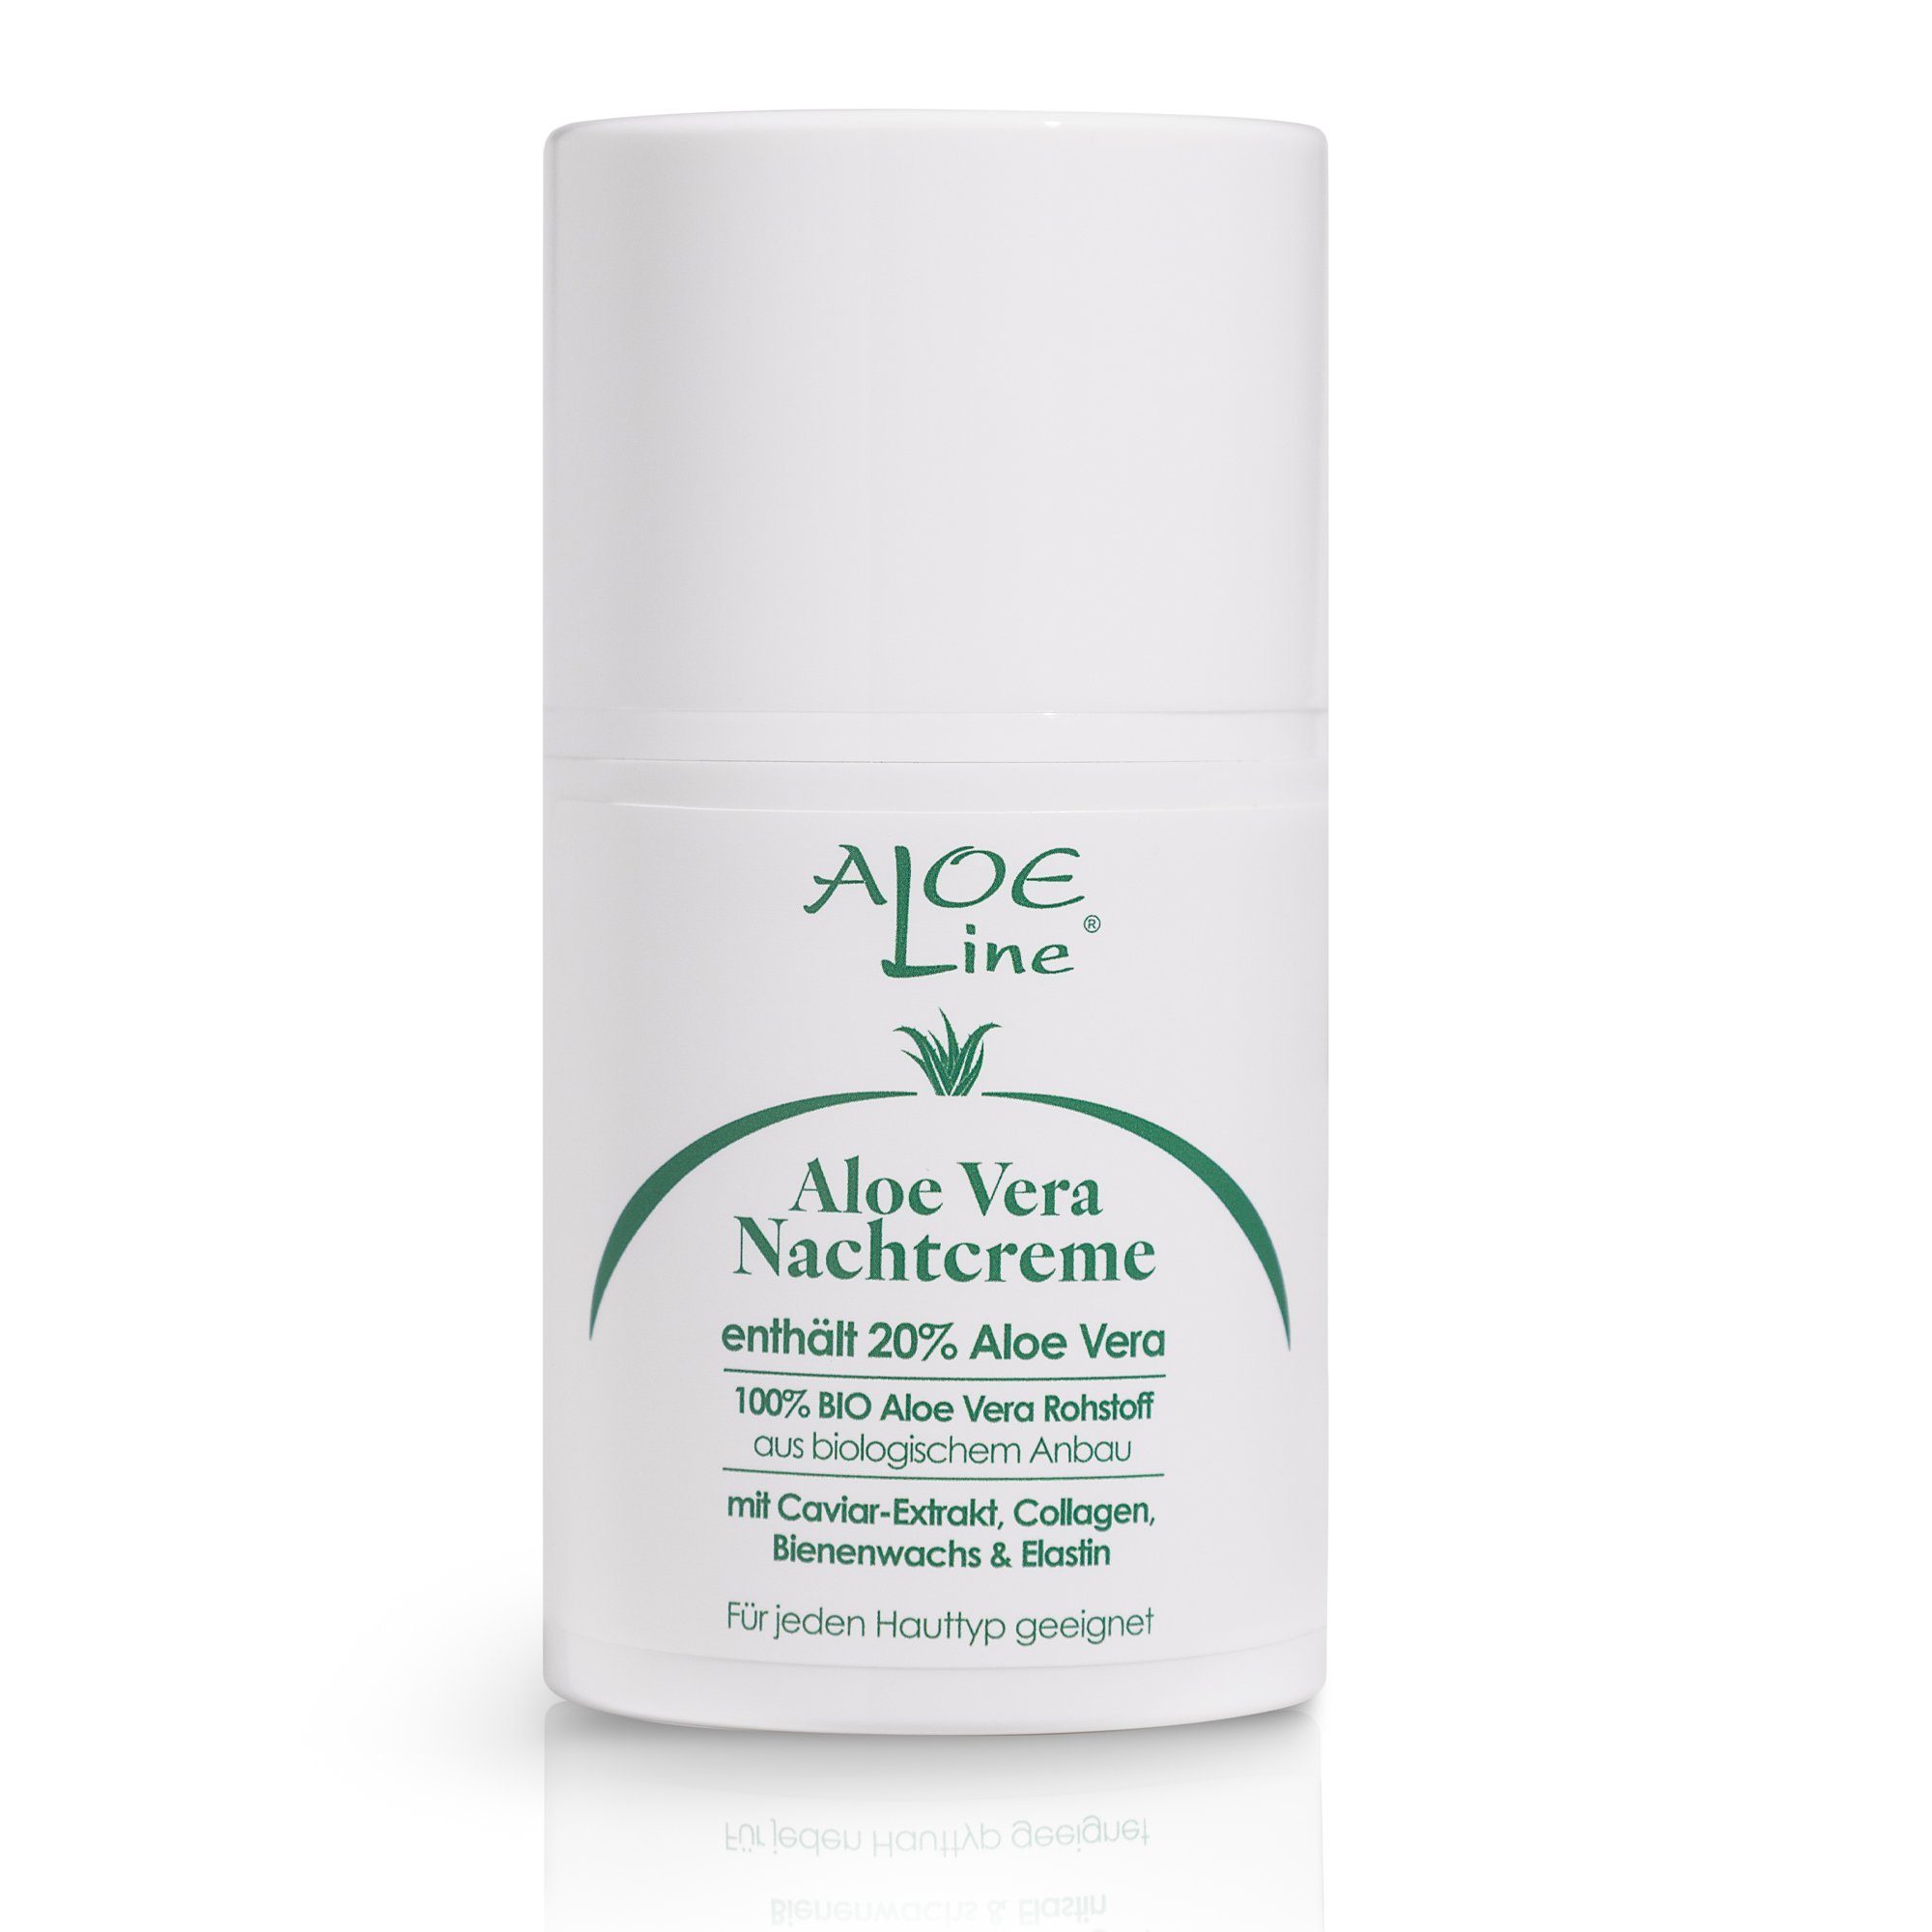 Aloe Nachtcreme Vera Aloe Caviar-Extrakt, Bio Line Vera mit 20% Dispenser ALOE & Airless 50ml Nachtcreme